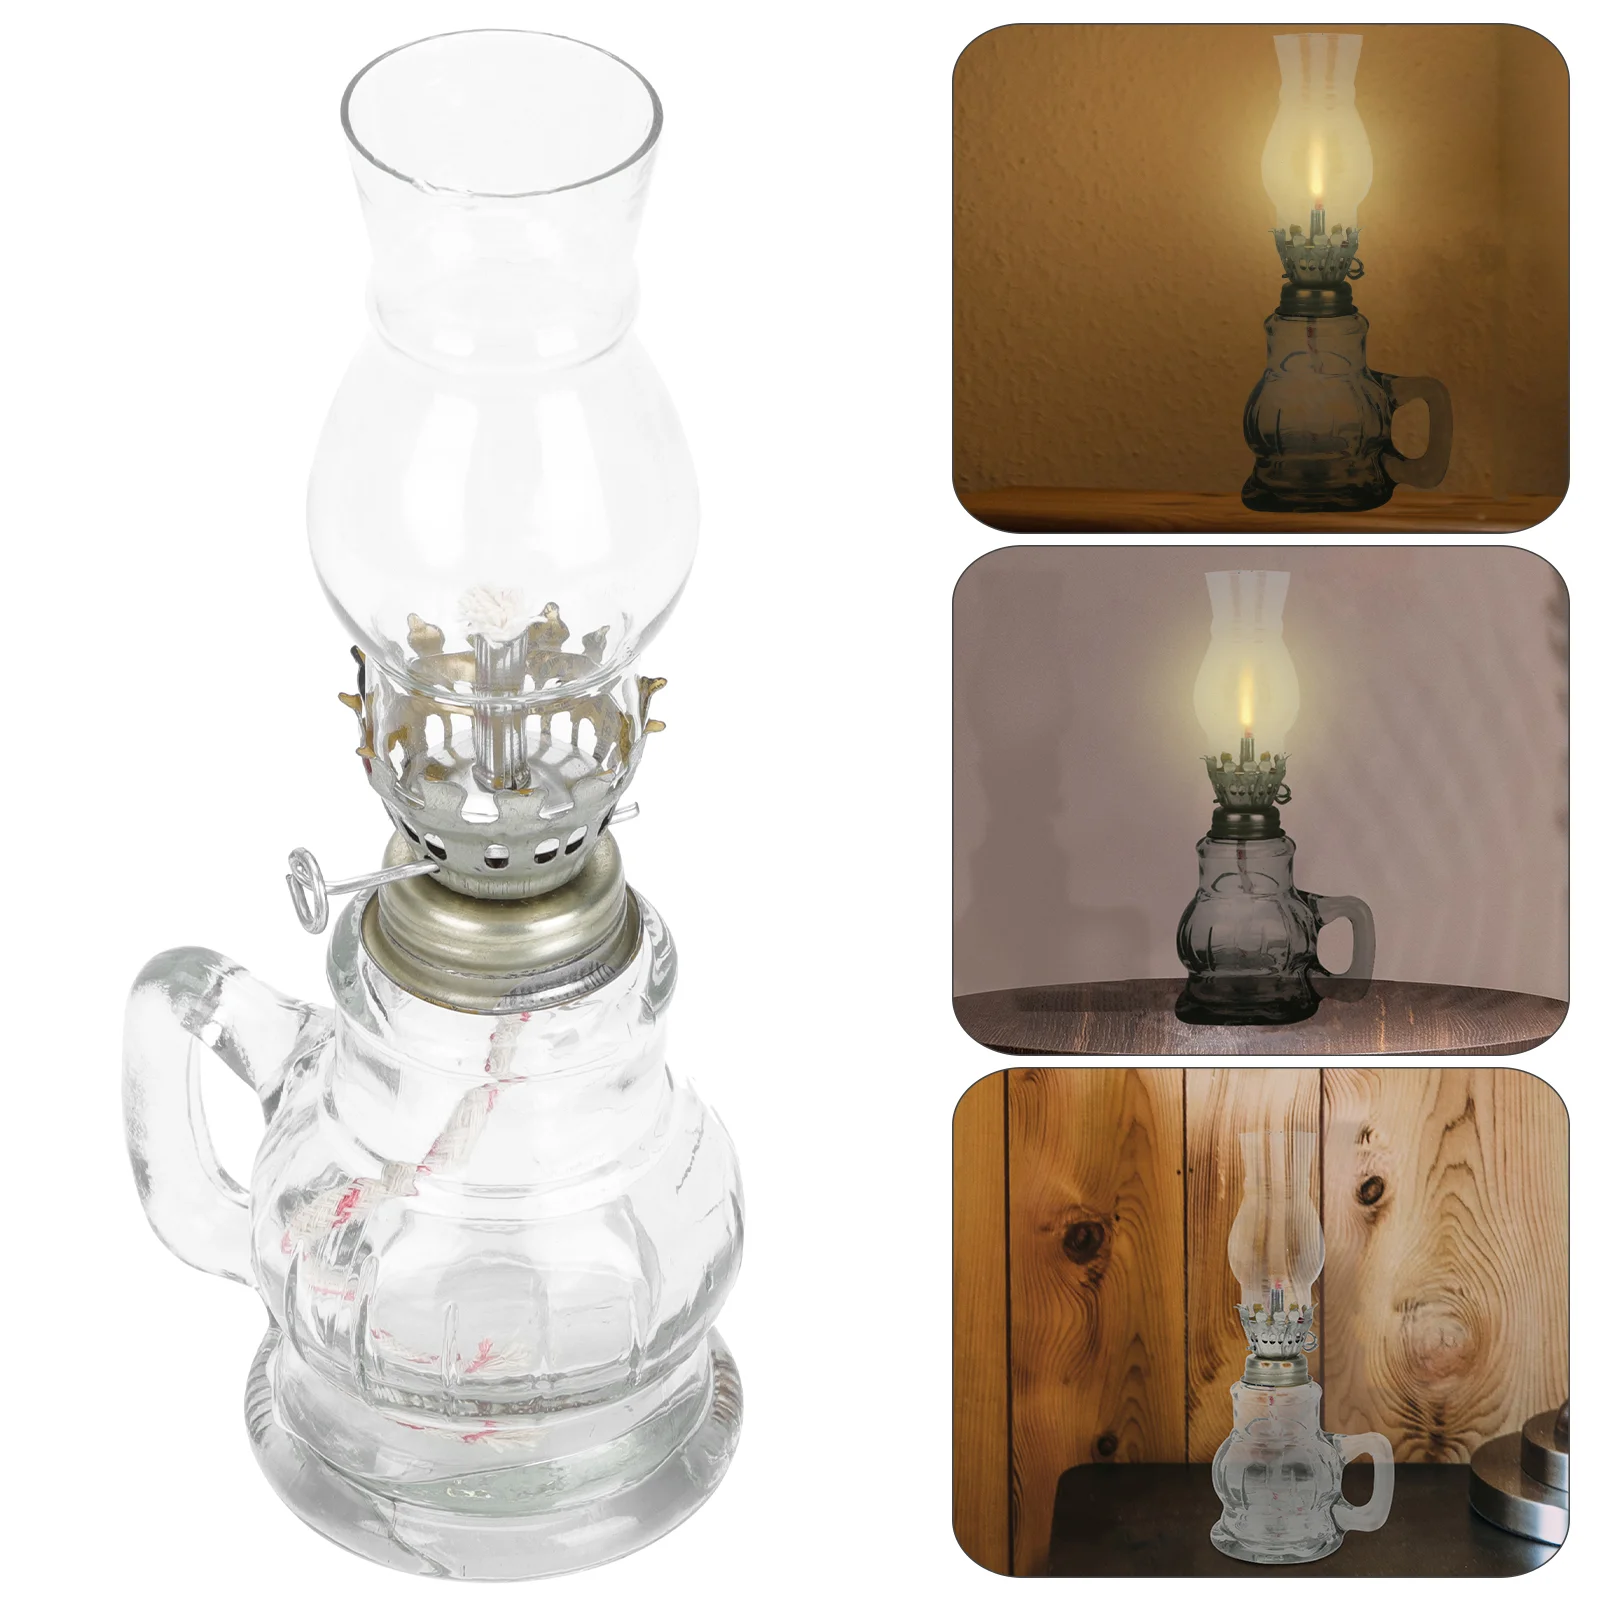 

Lamp Oil Kerosenelamps Lanternindoor Use Vintage Lanterns Retrodecor Chamber Lighting Globes Light Cover Classic Home Emergency